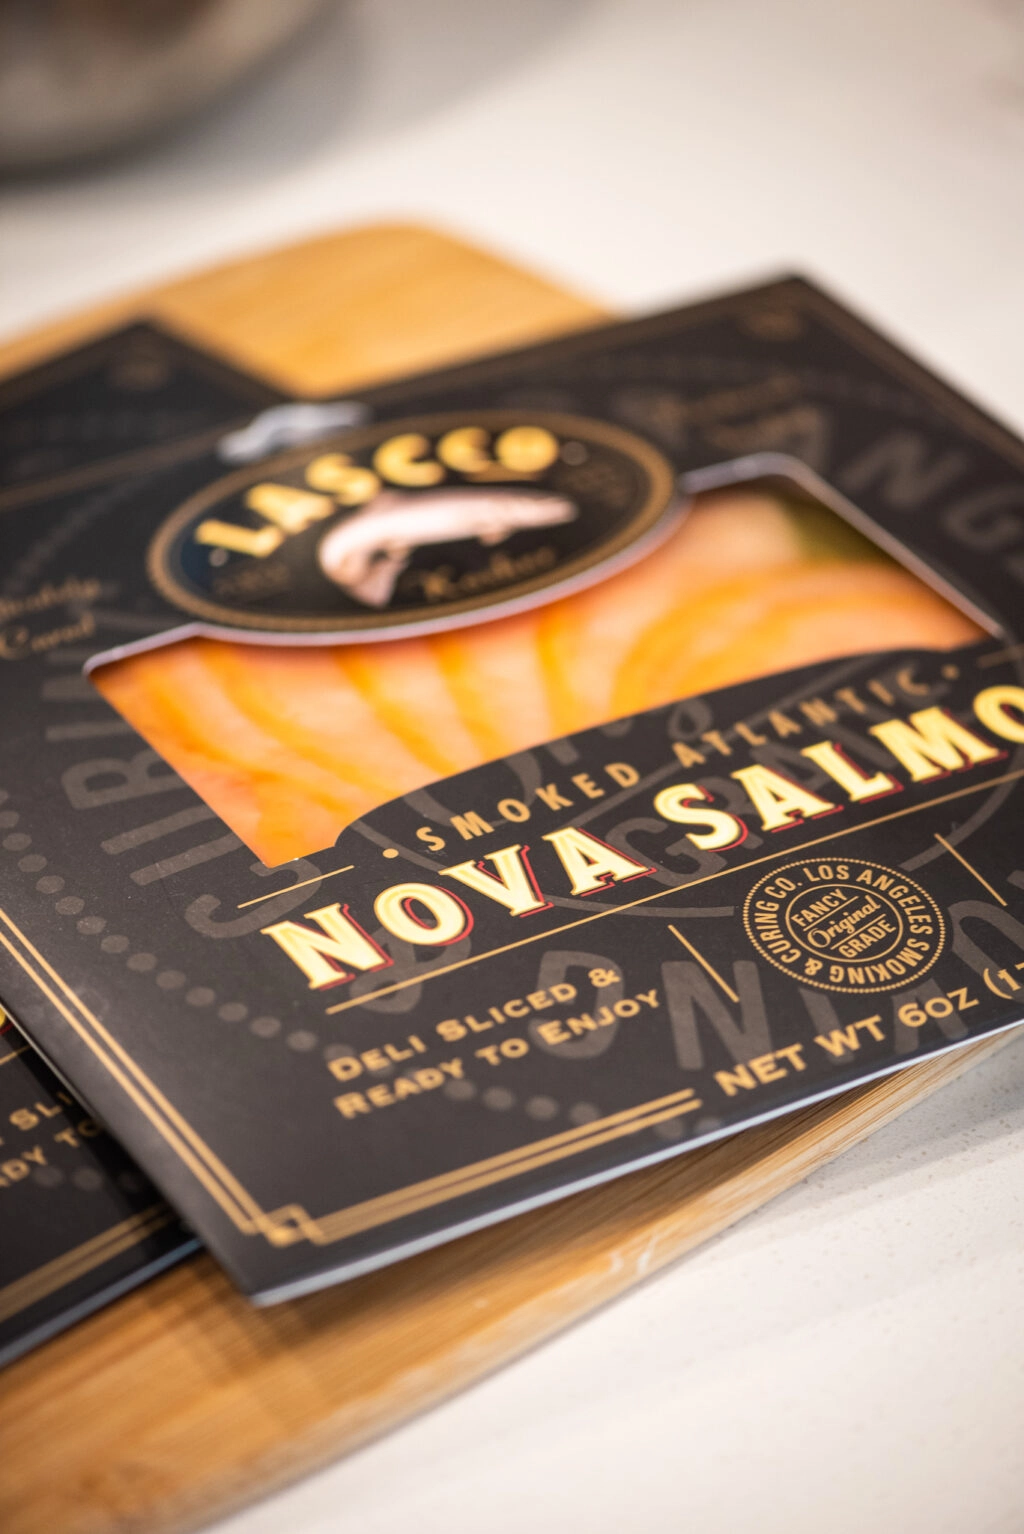 Nova smoked salmon kosher